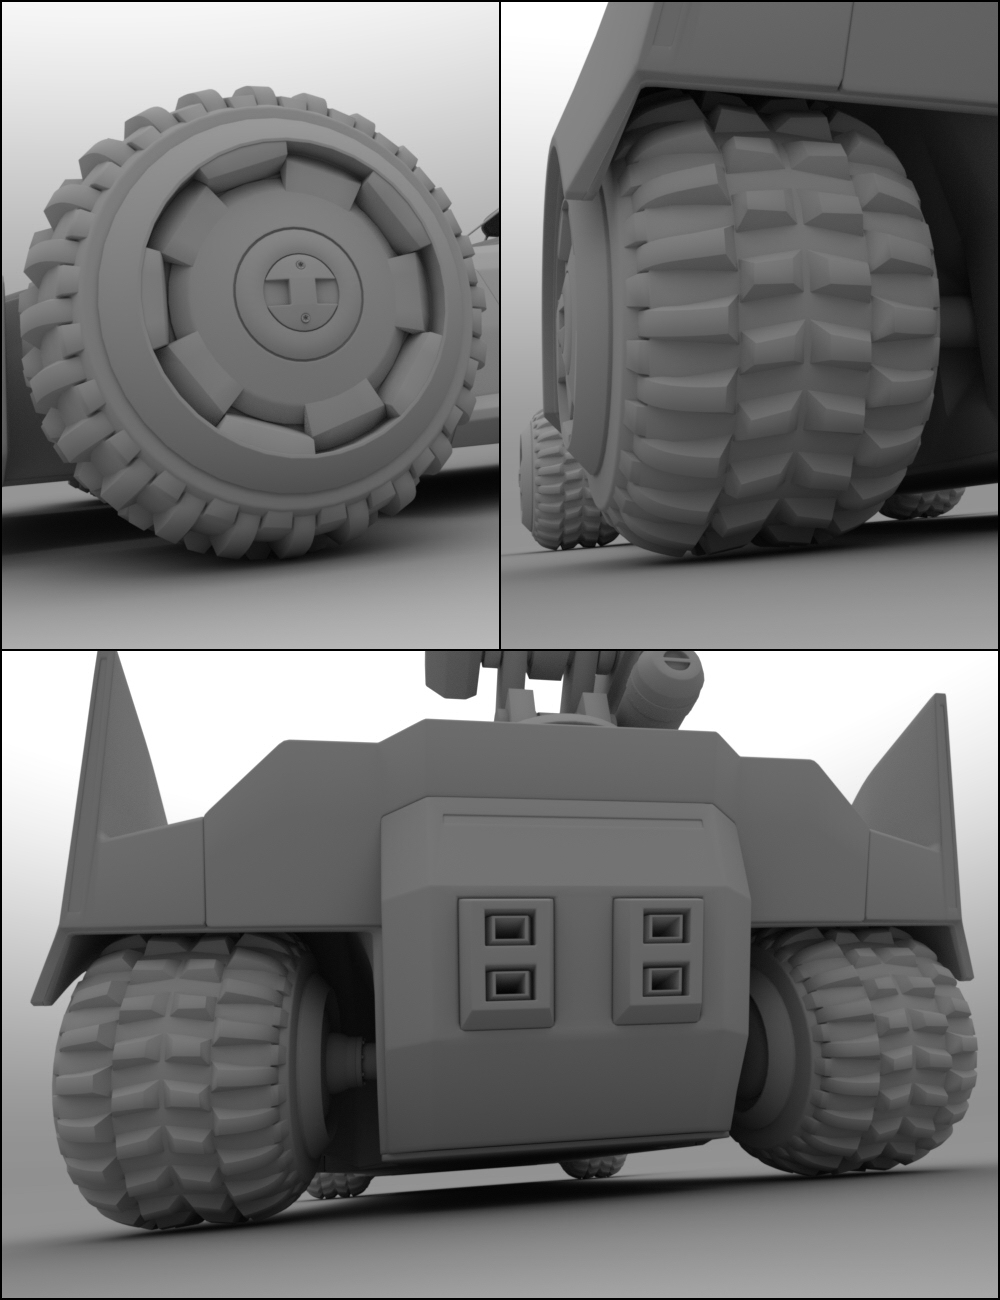 The Super Hero's Car by: Mattymanx, 3D Models by Daz 3D